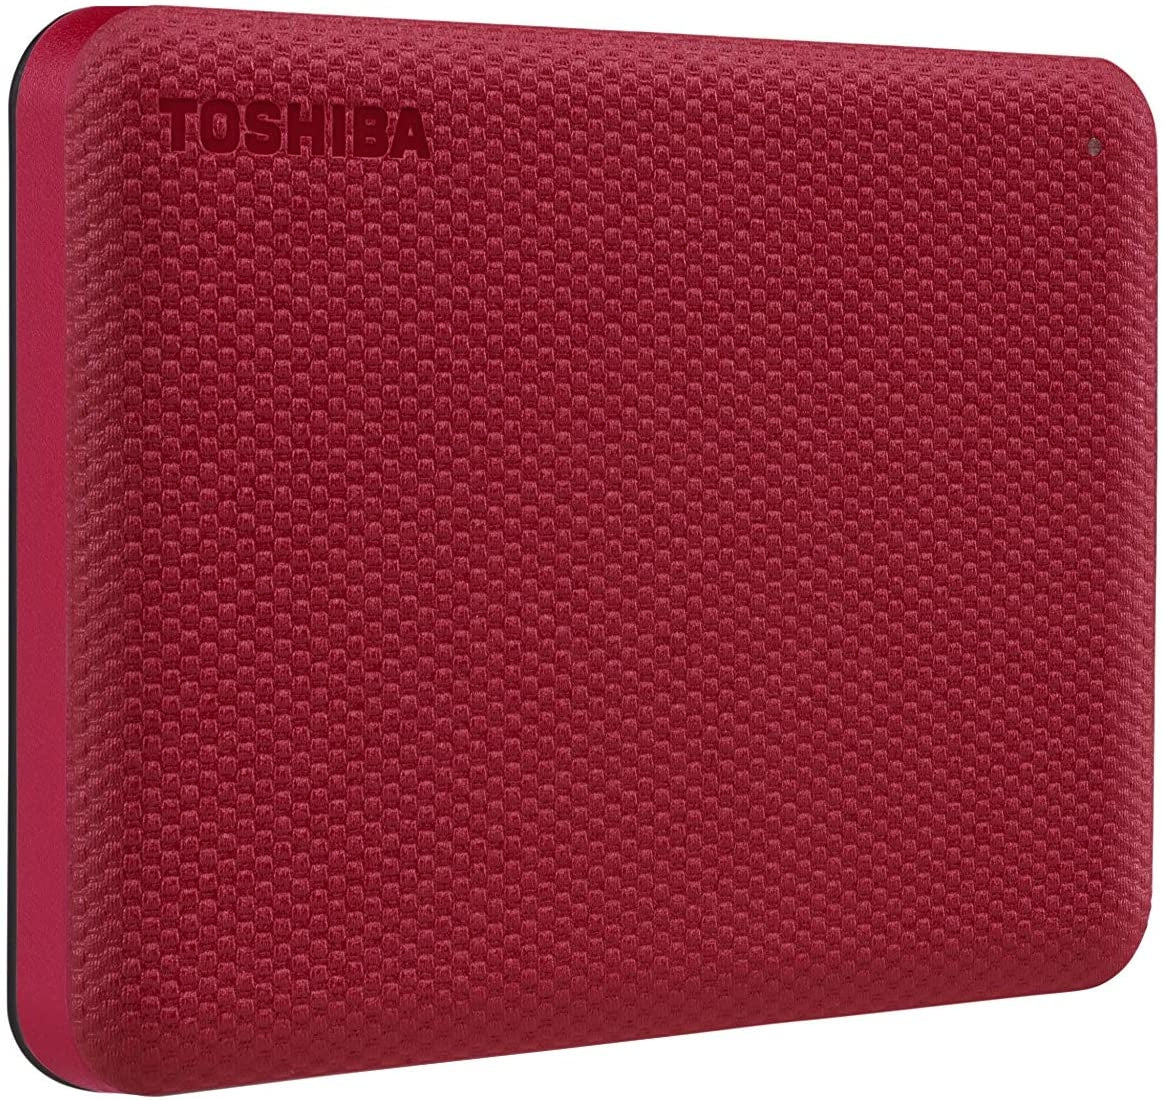 Disco Duro Externo Toshiba Canvio Advance V10 4 Tb Usb 3.0 2.5 Pulgadas Rojo